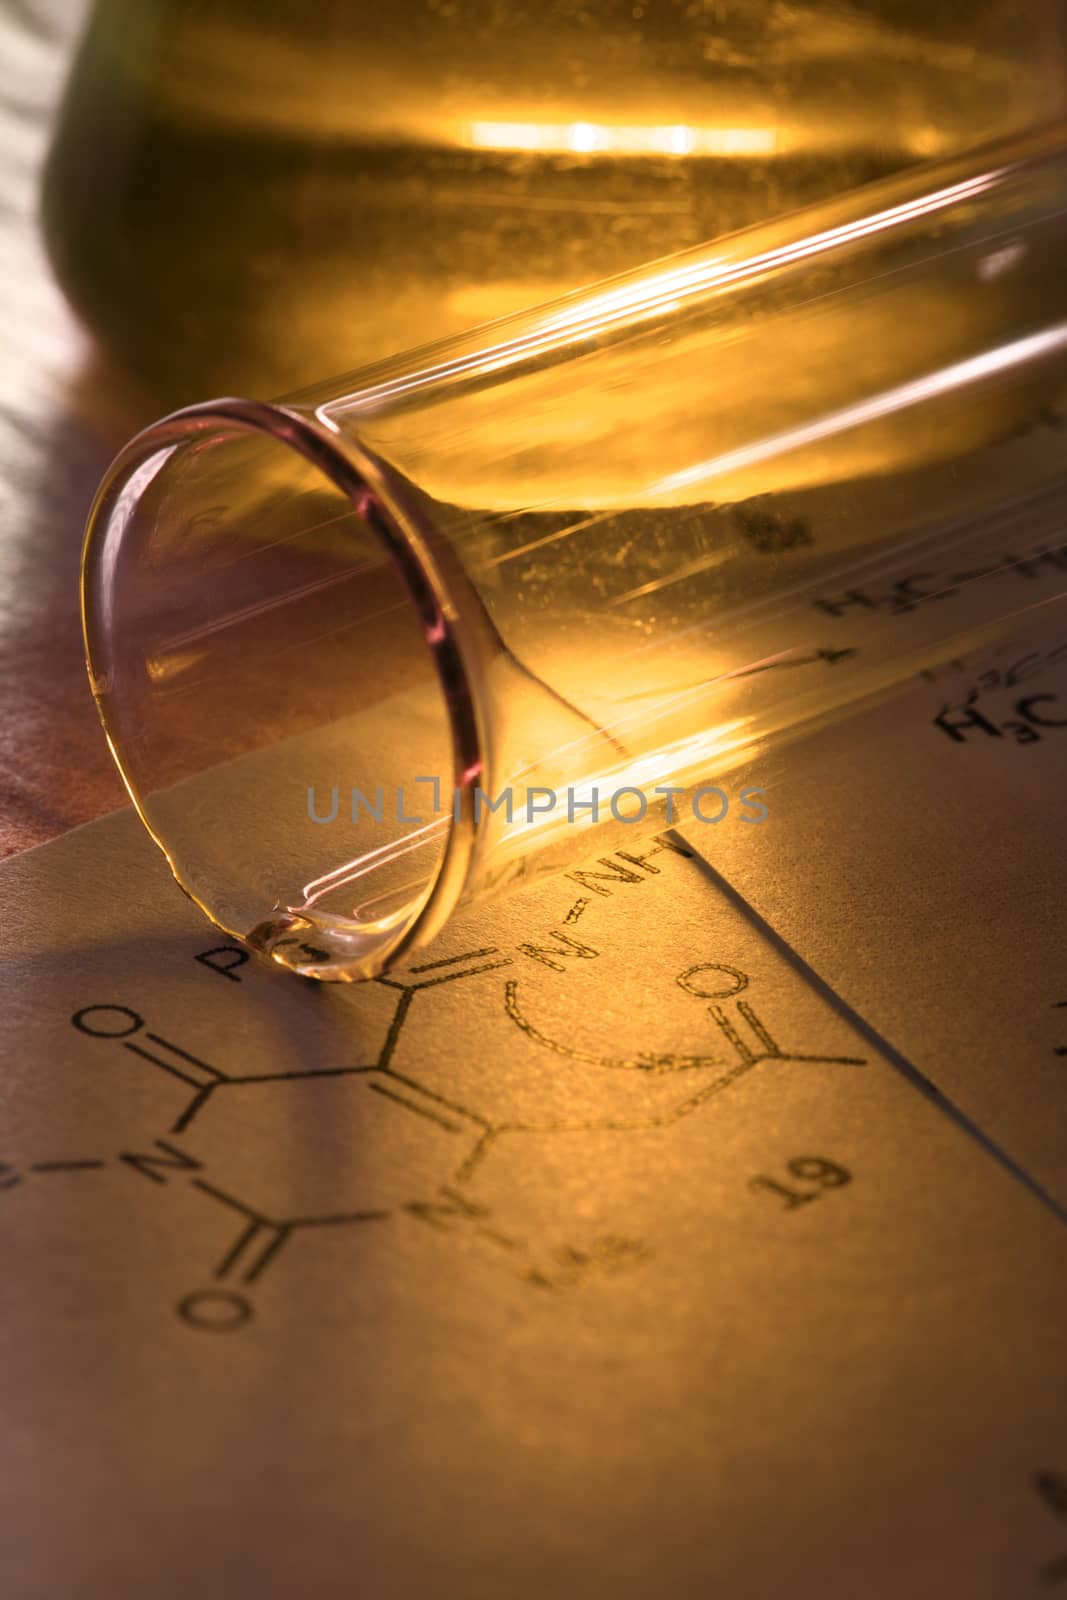 Chemistry image with reaction formula by Garsya